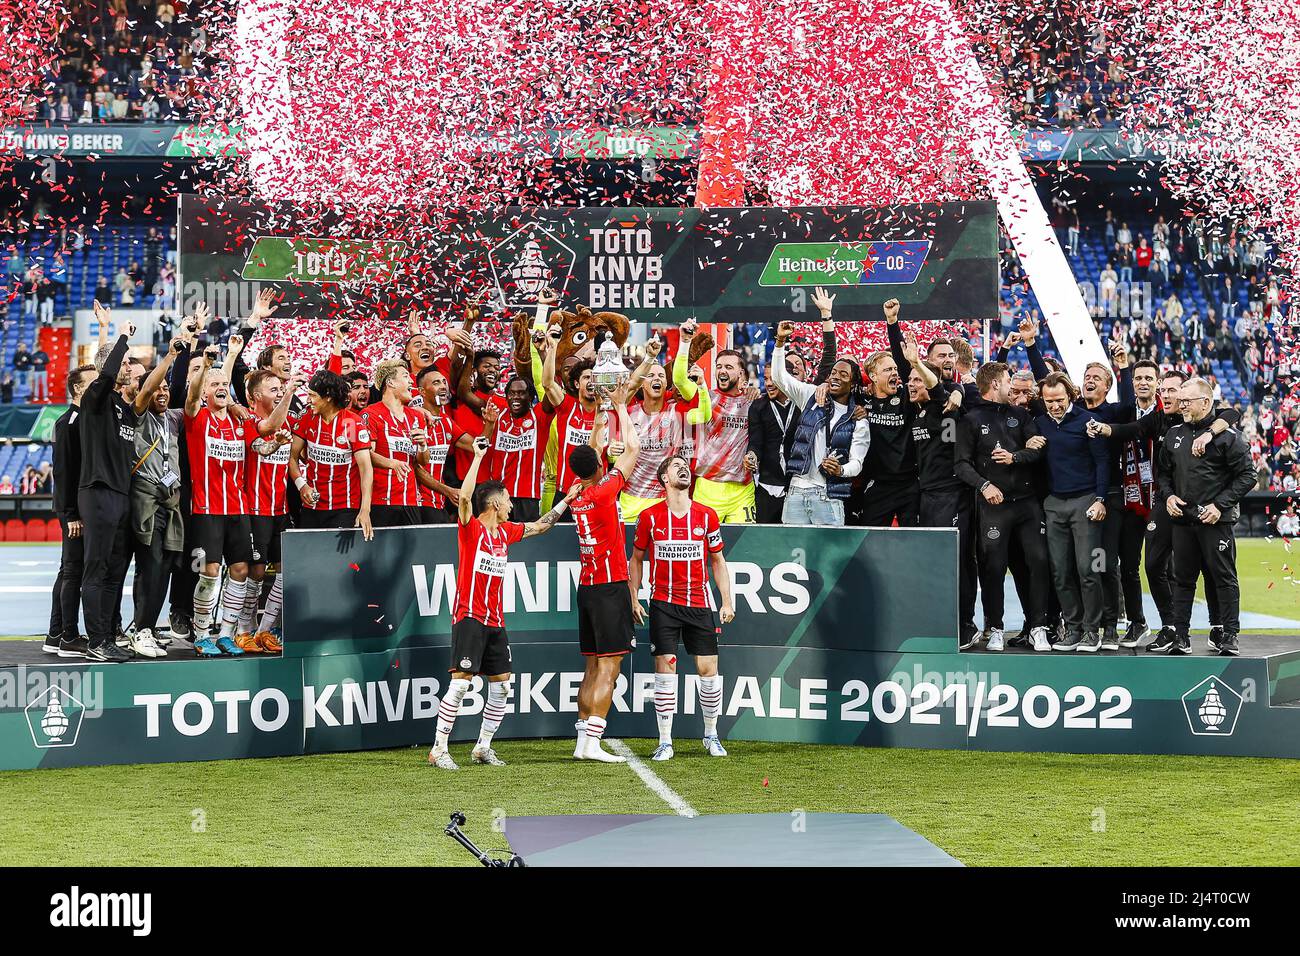 ROTTERDAM, 17-04-2022, Stadion de Kuip , season 2020 / 2021 TOTO KNVB Beker  , Dutch Football between PSV and Ajax. Final score 2-1. PSV wins cup (Photo  by Pro Shots/Sipa USA) ***